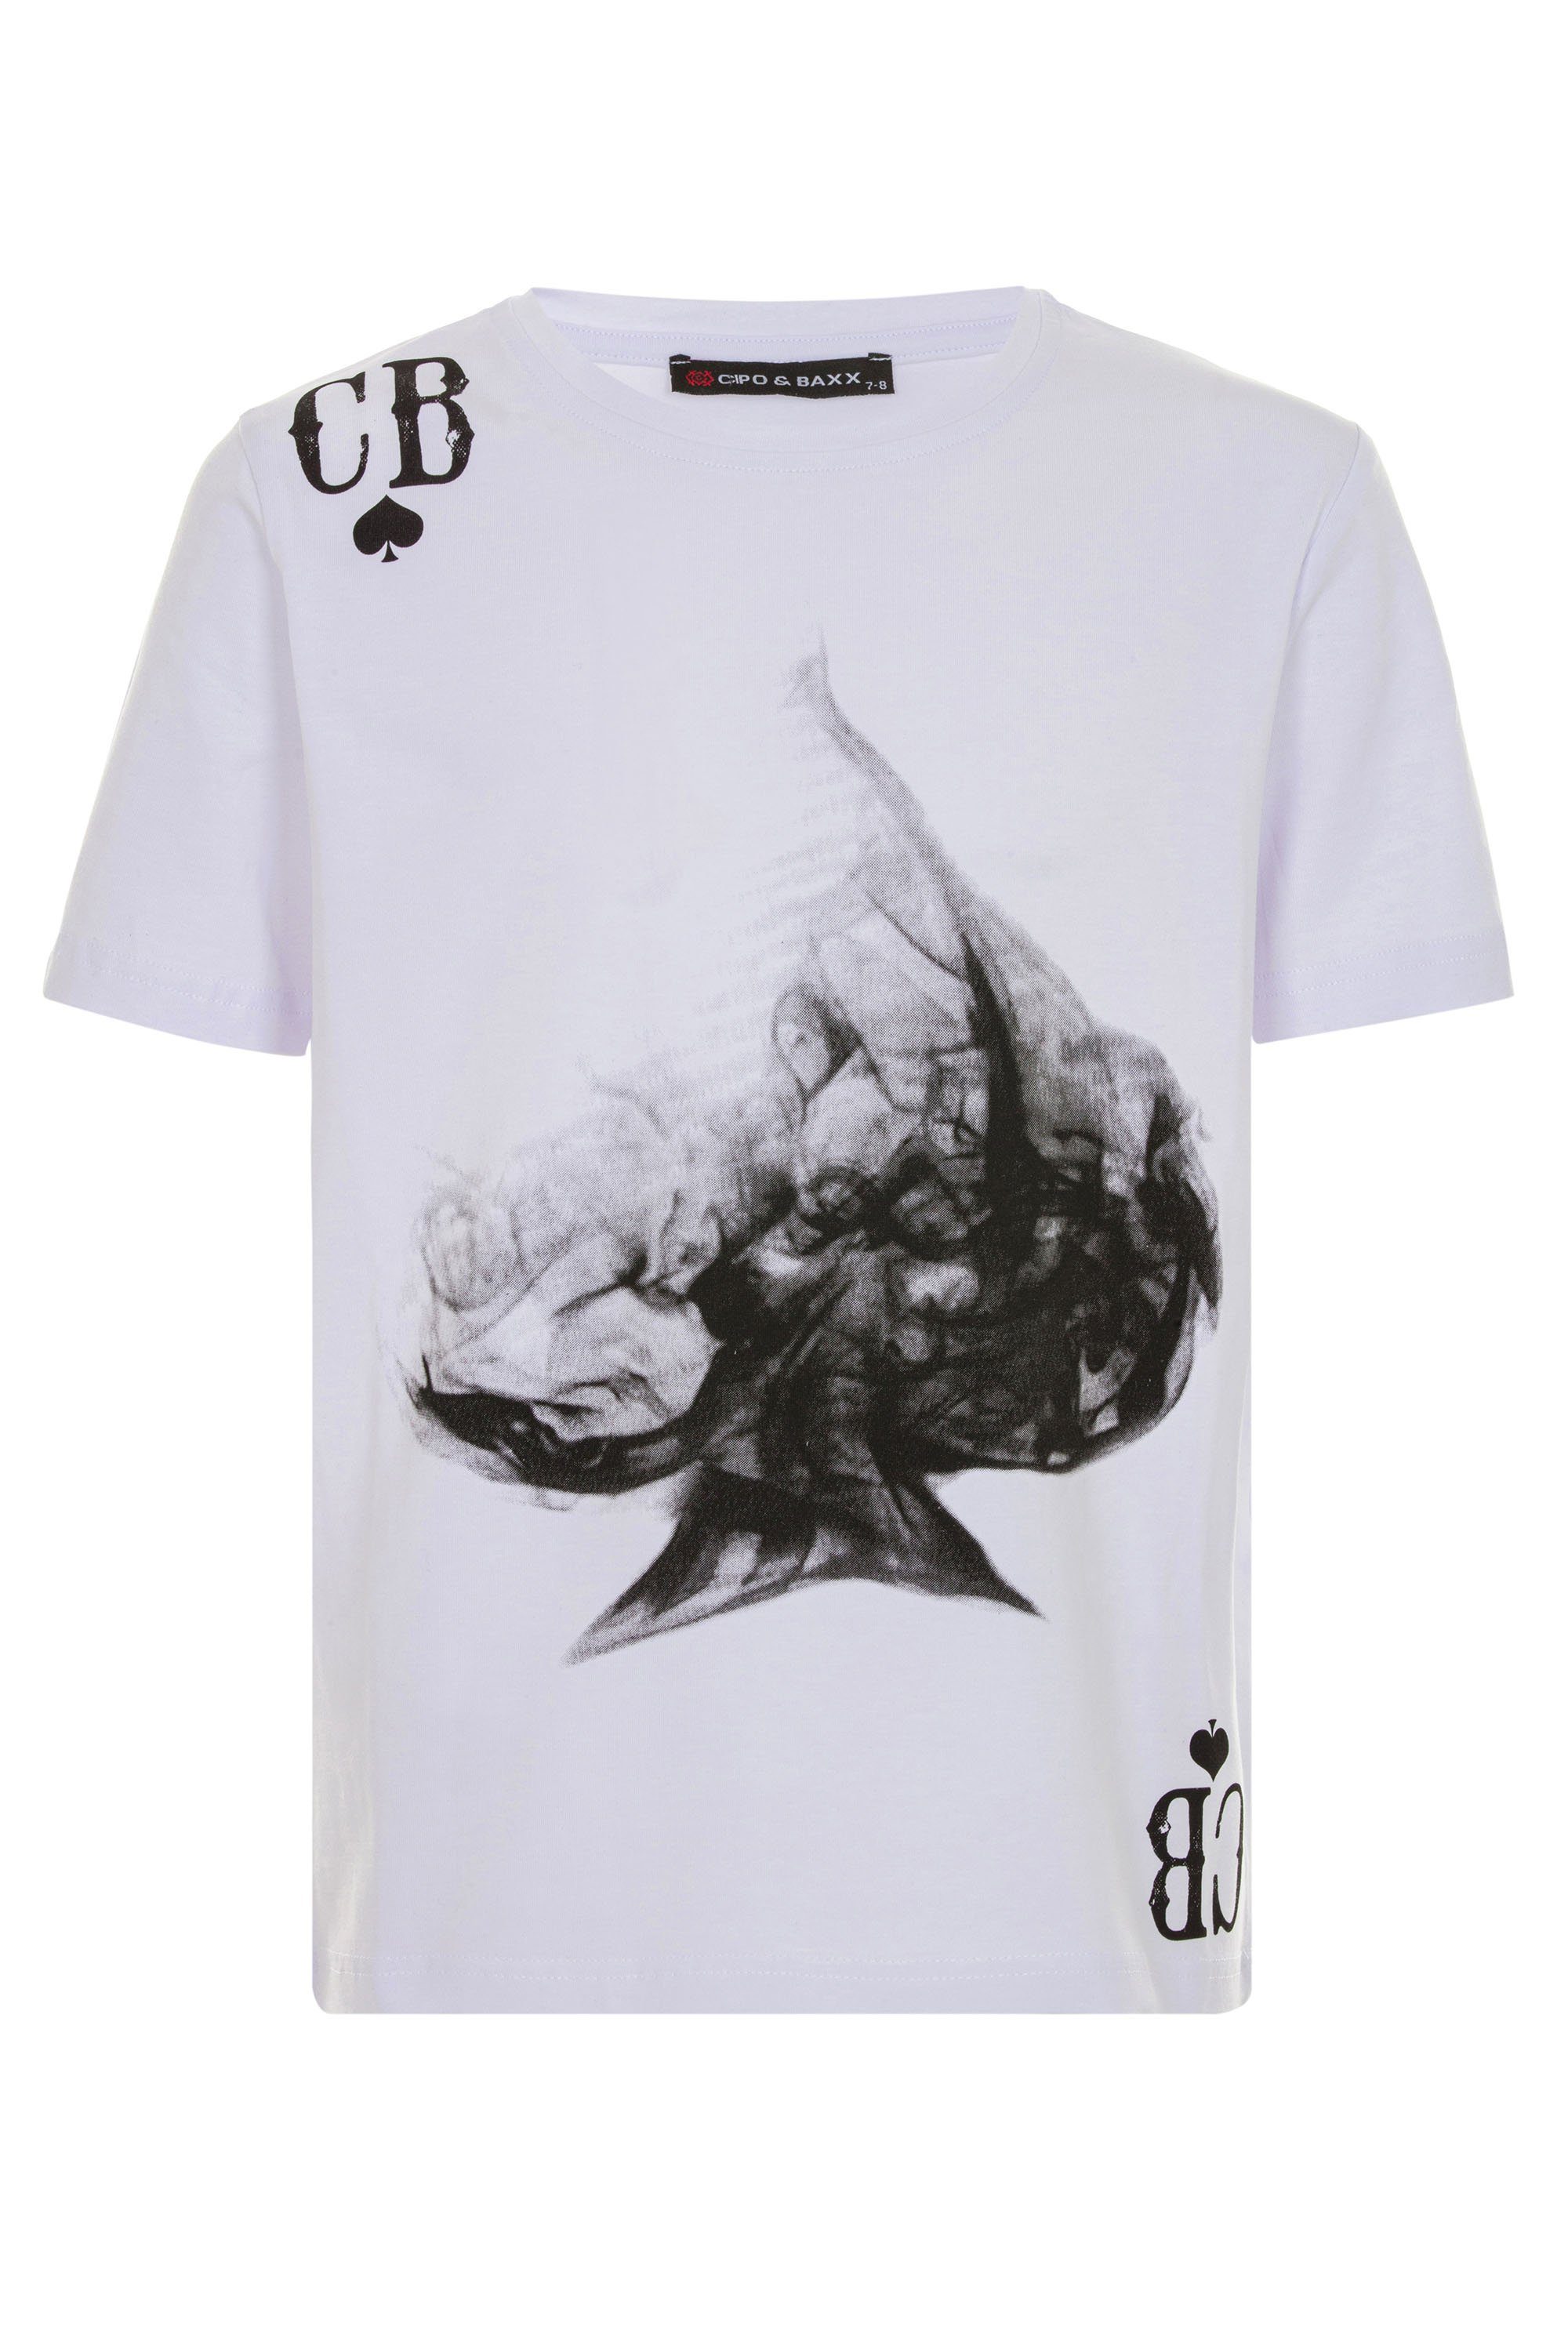 coolem Print Cipo & weiß-schwarz Baxx T-Shirt mit